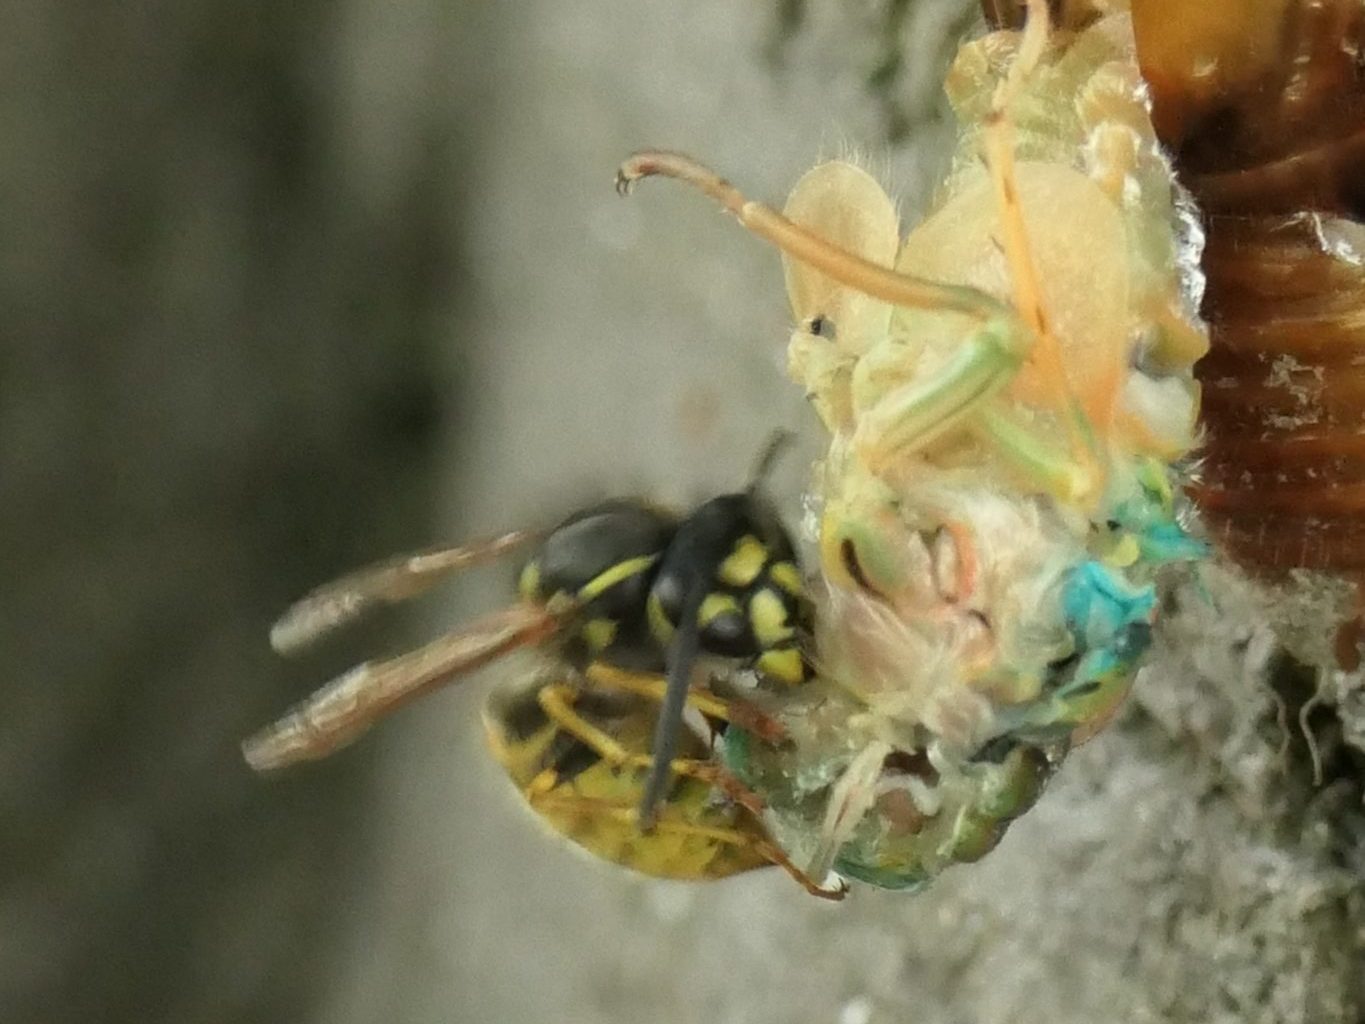 A wasp eating a dead cicada.